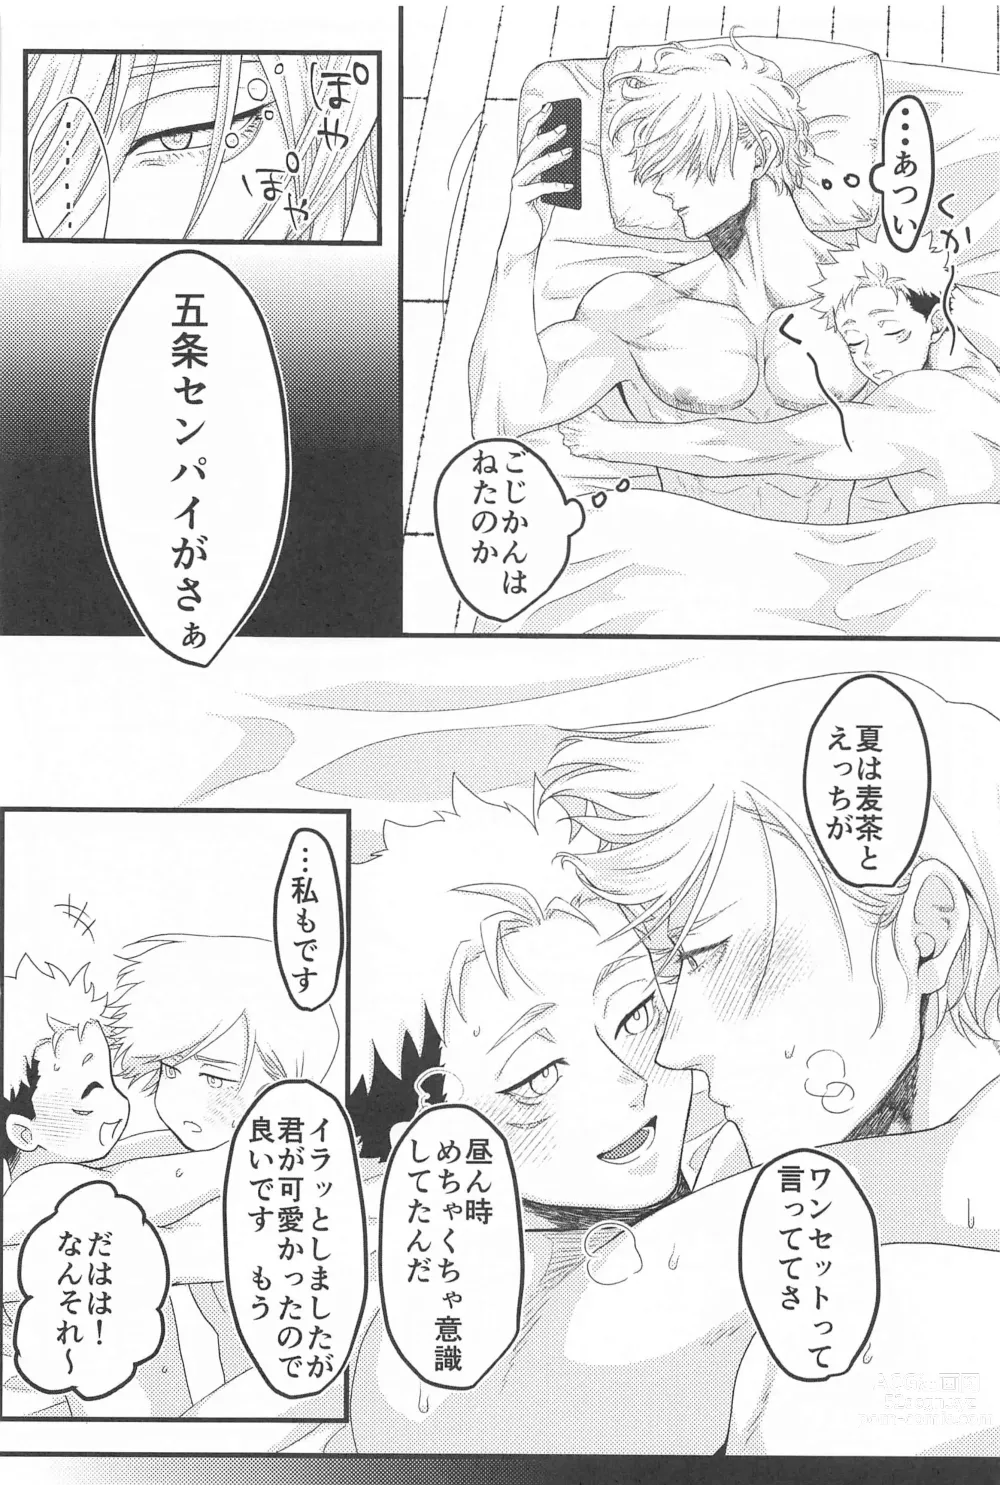 Page 39 of doujinshi altarf